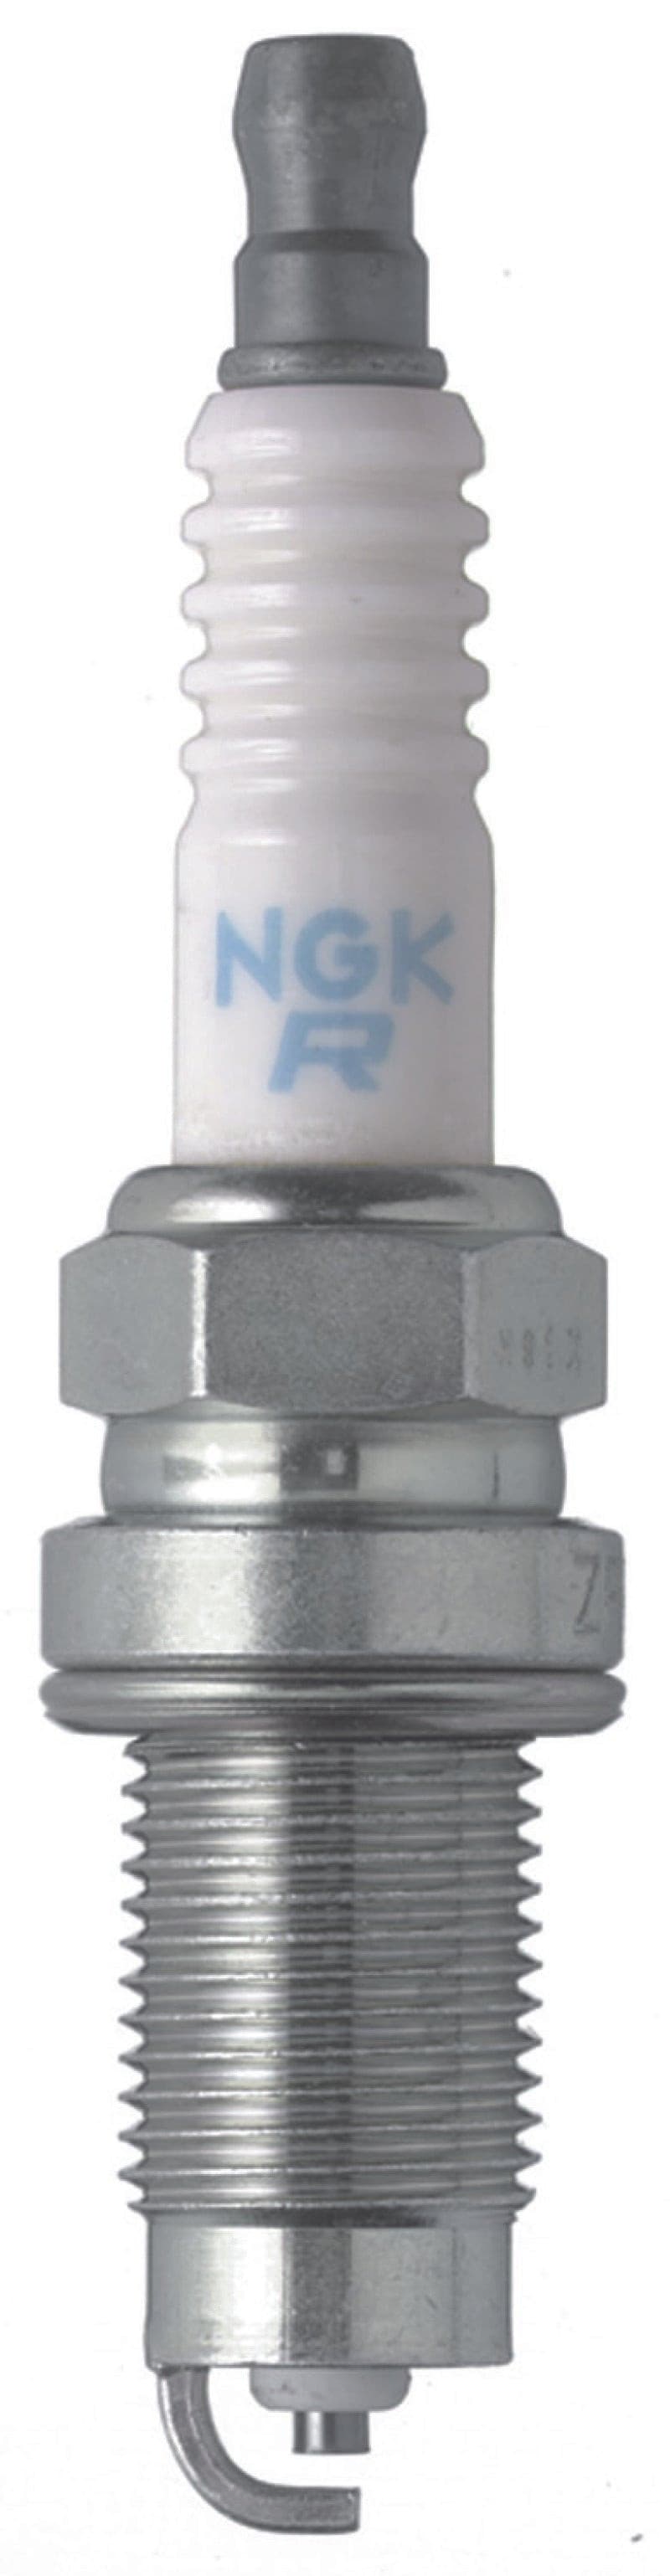 NGK V-Power Spark Plug Box of 4 (ZFRSE-11).